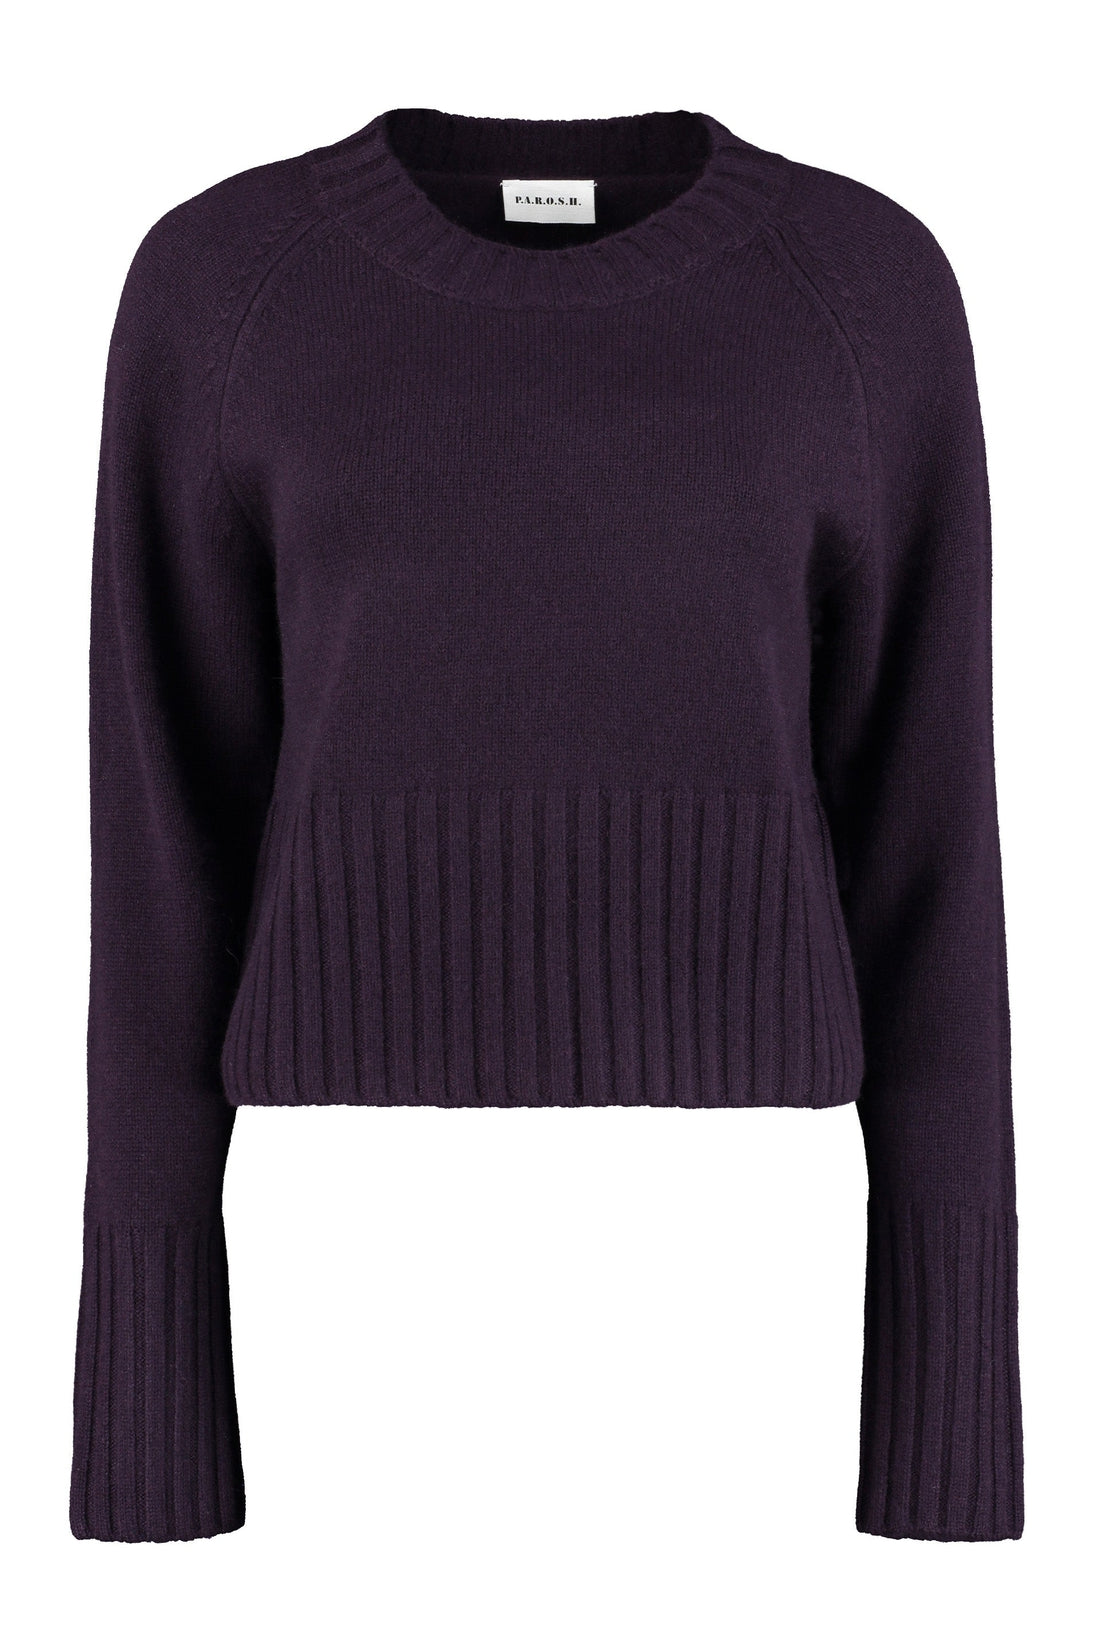 Parosh-OUTLET-SALE-Logan wool and cashmere sweater-ARCHIVIST